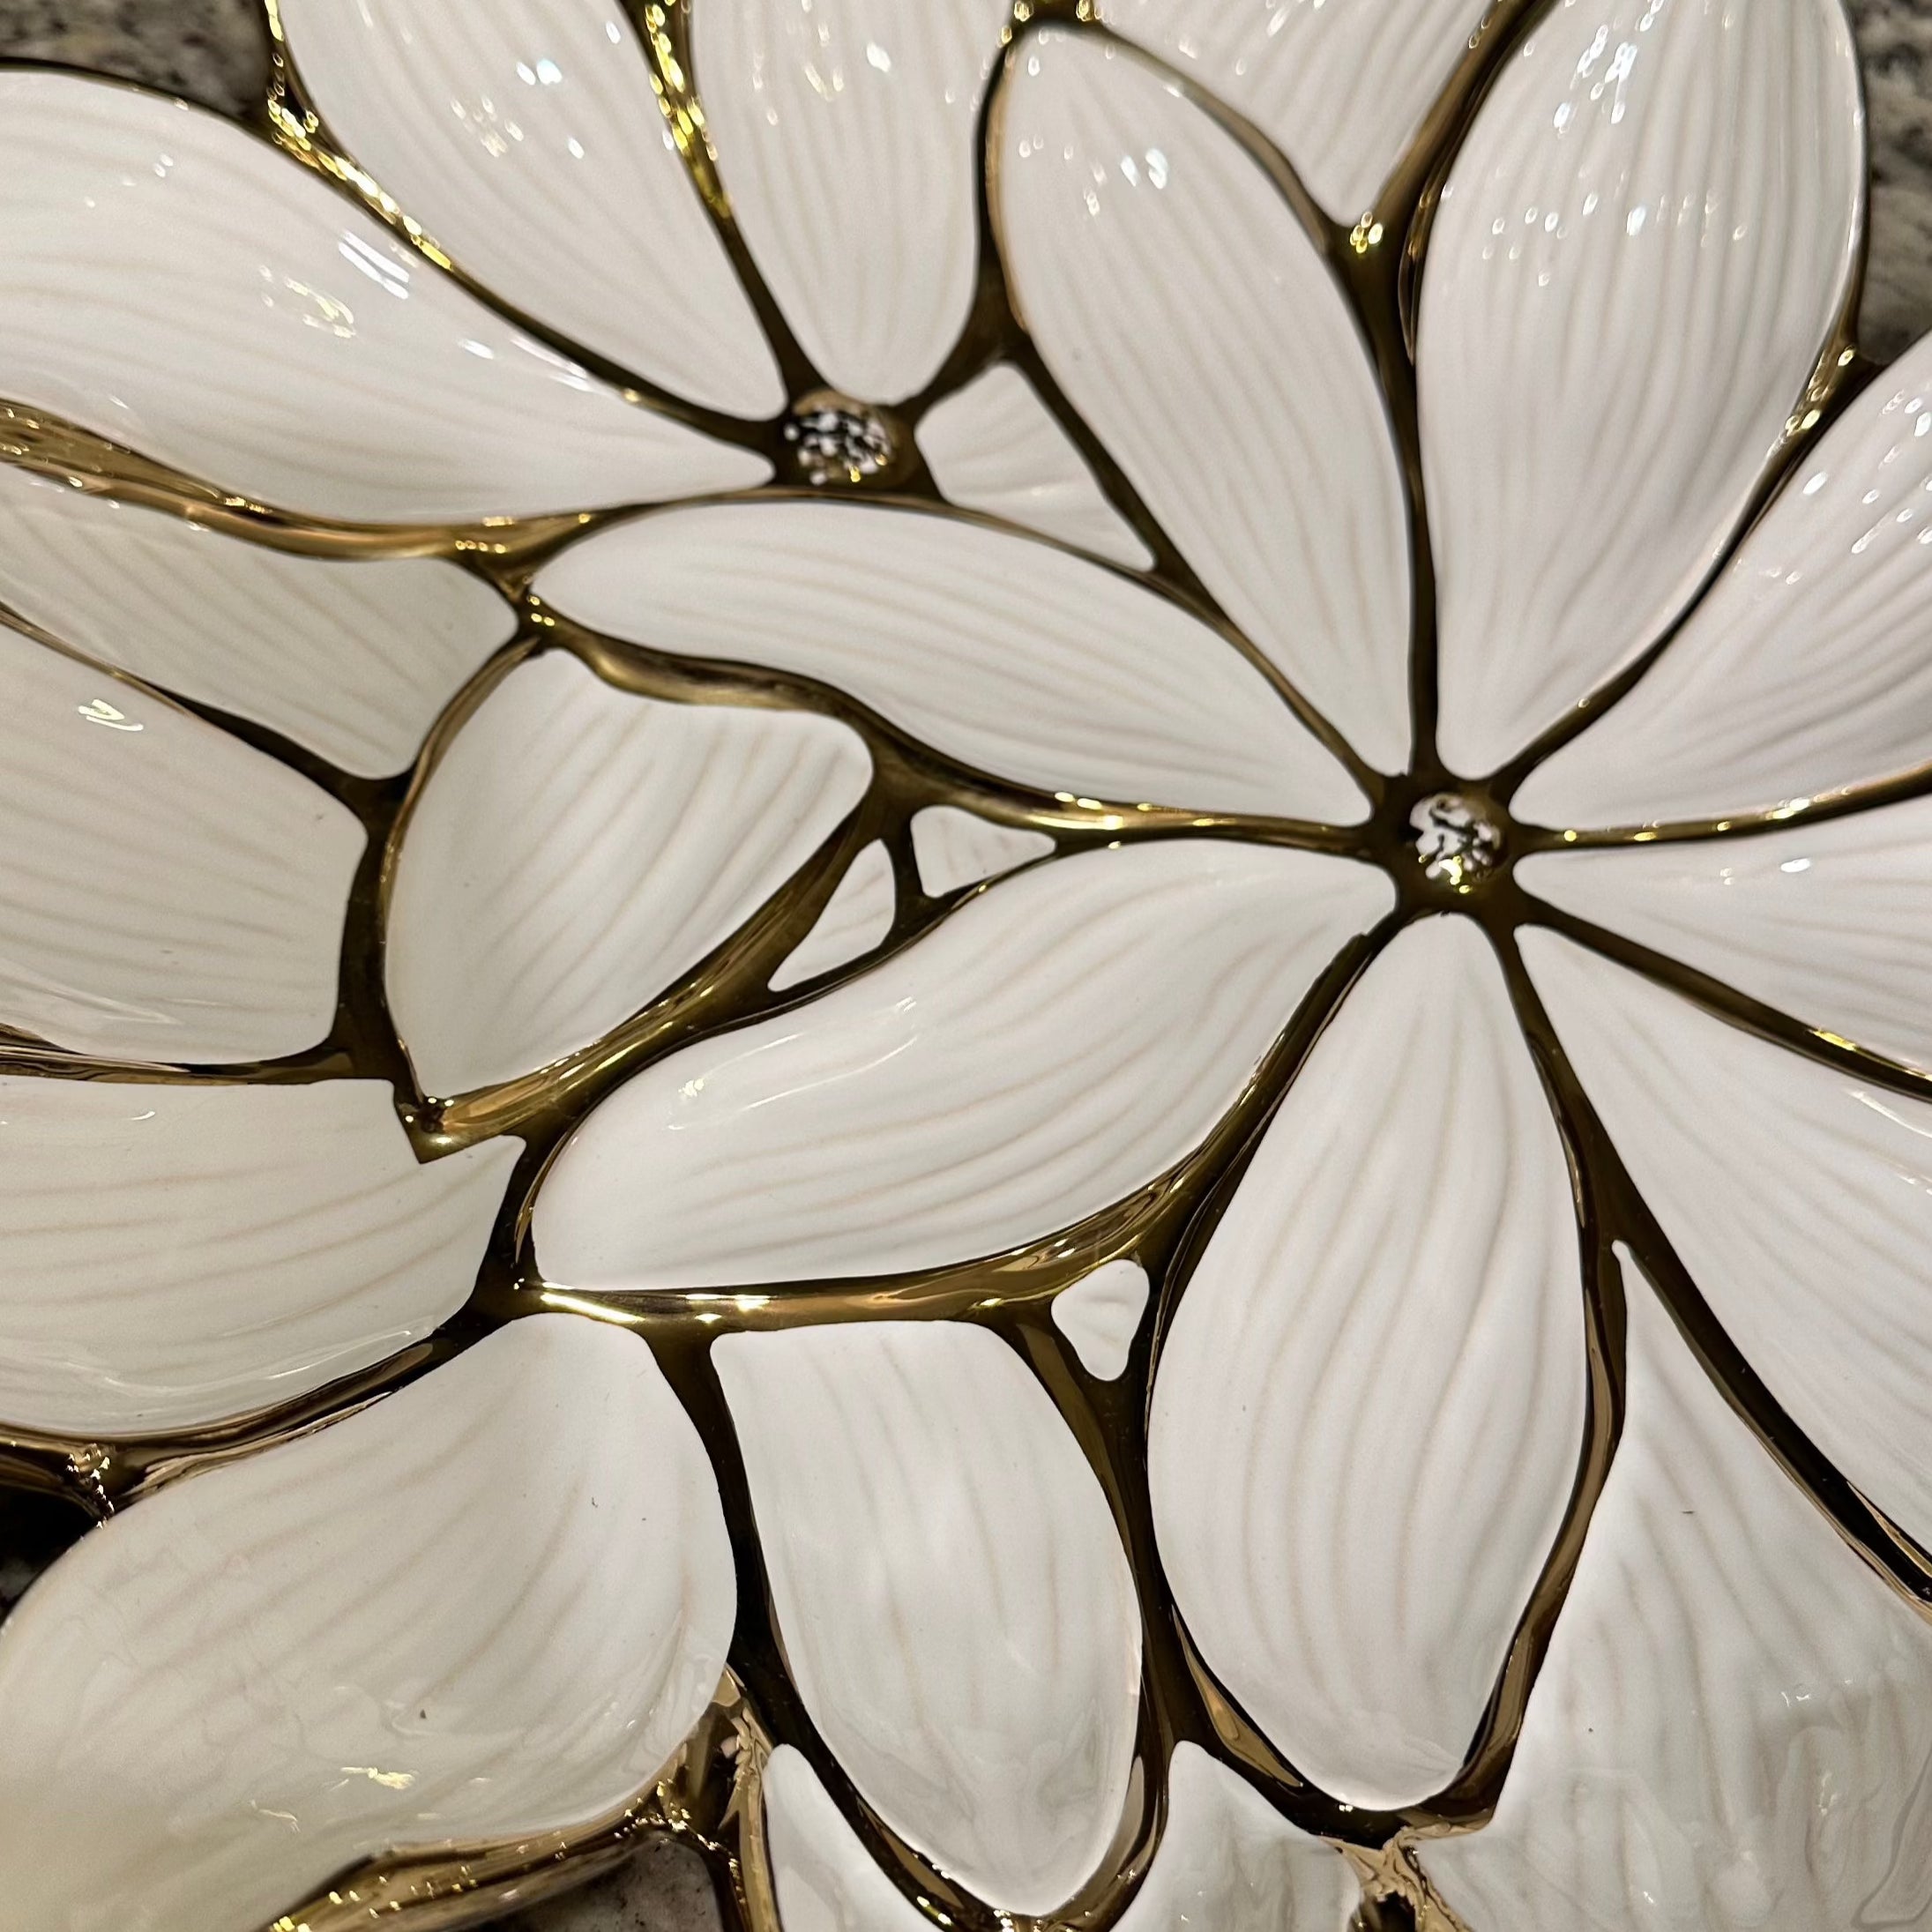 Plato de flores de porcelana blanca con borde dorado (11,75")